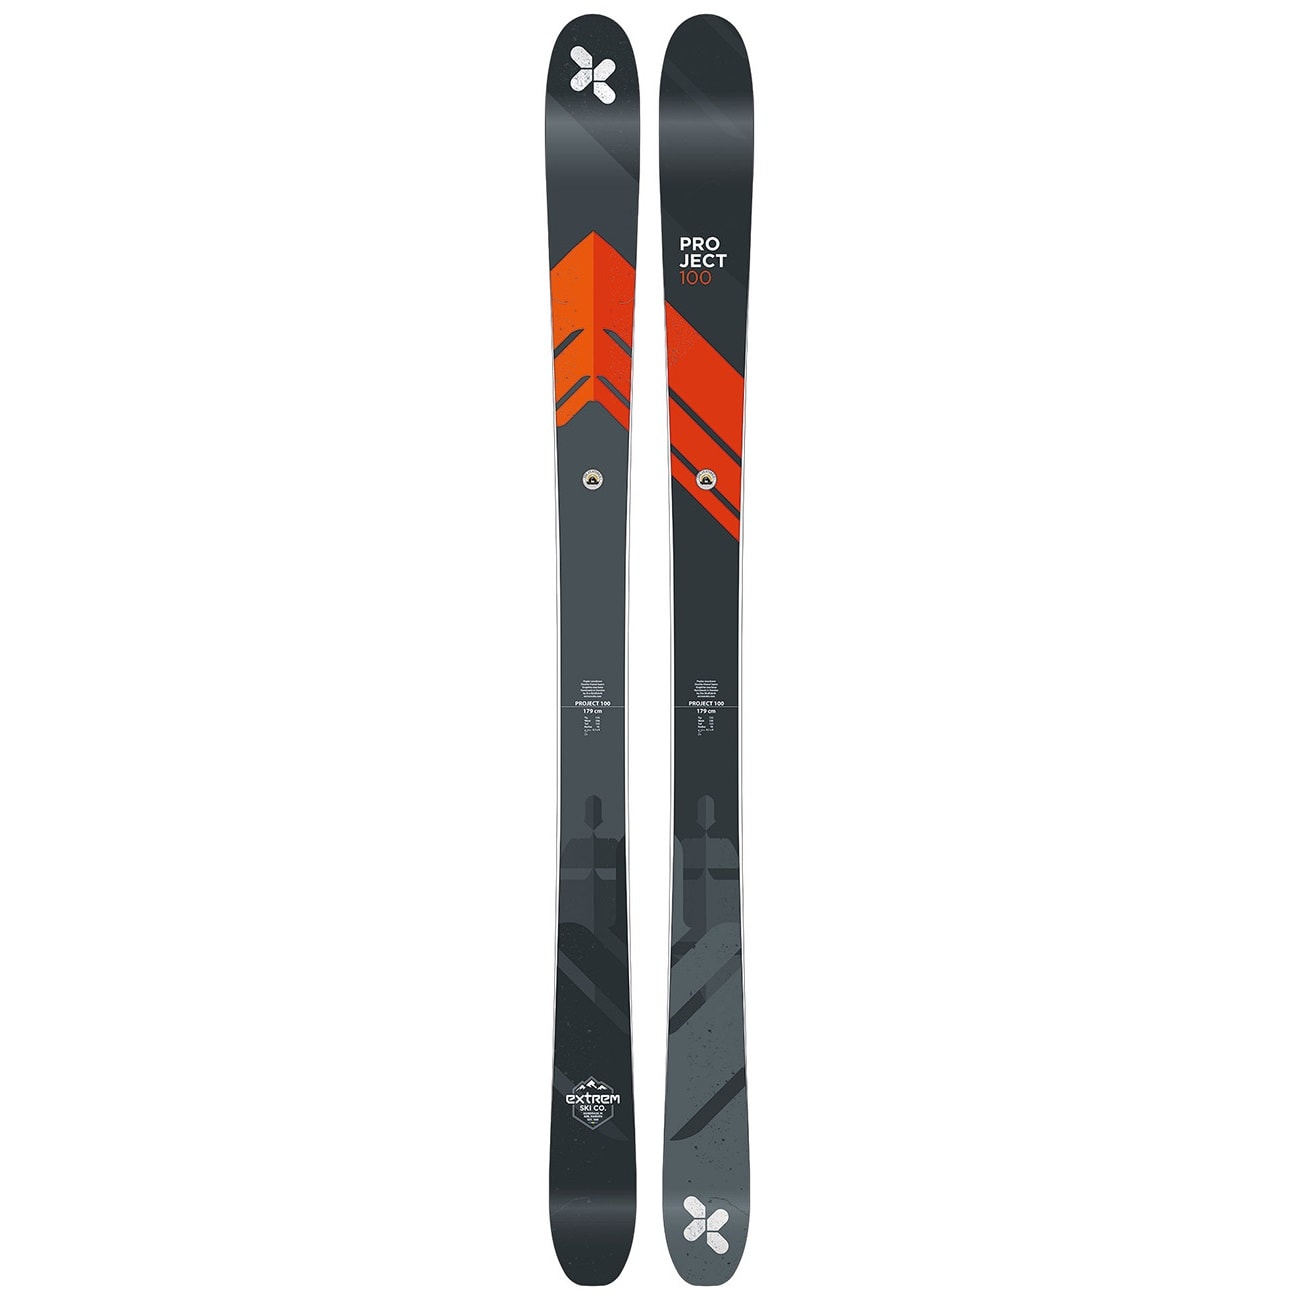 EXTREM PROJECT 100 186cm - スキー